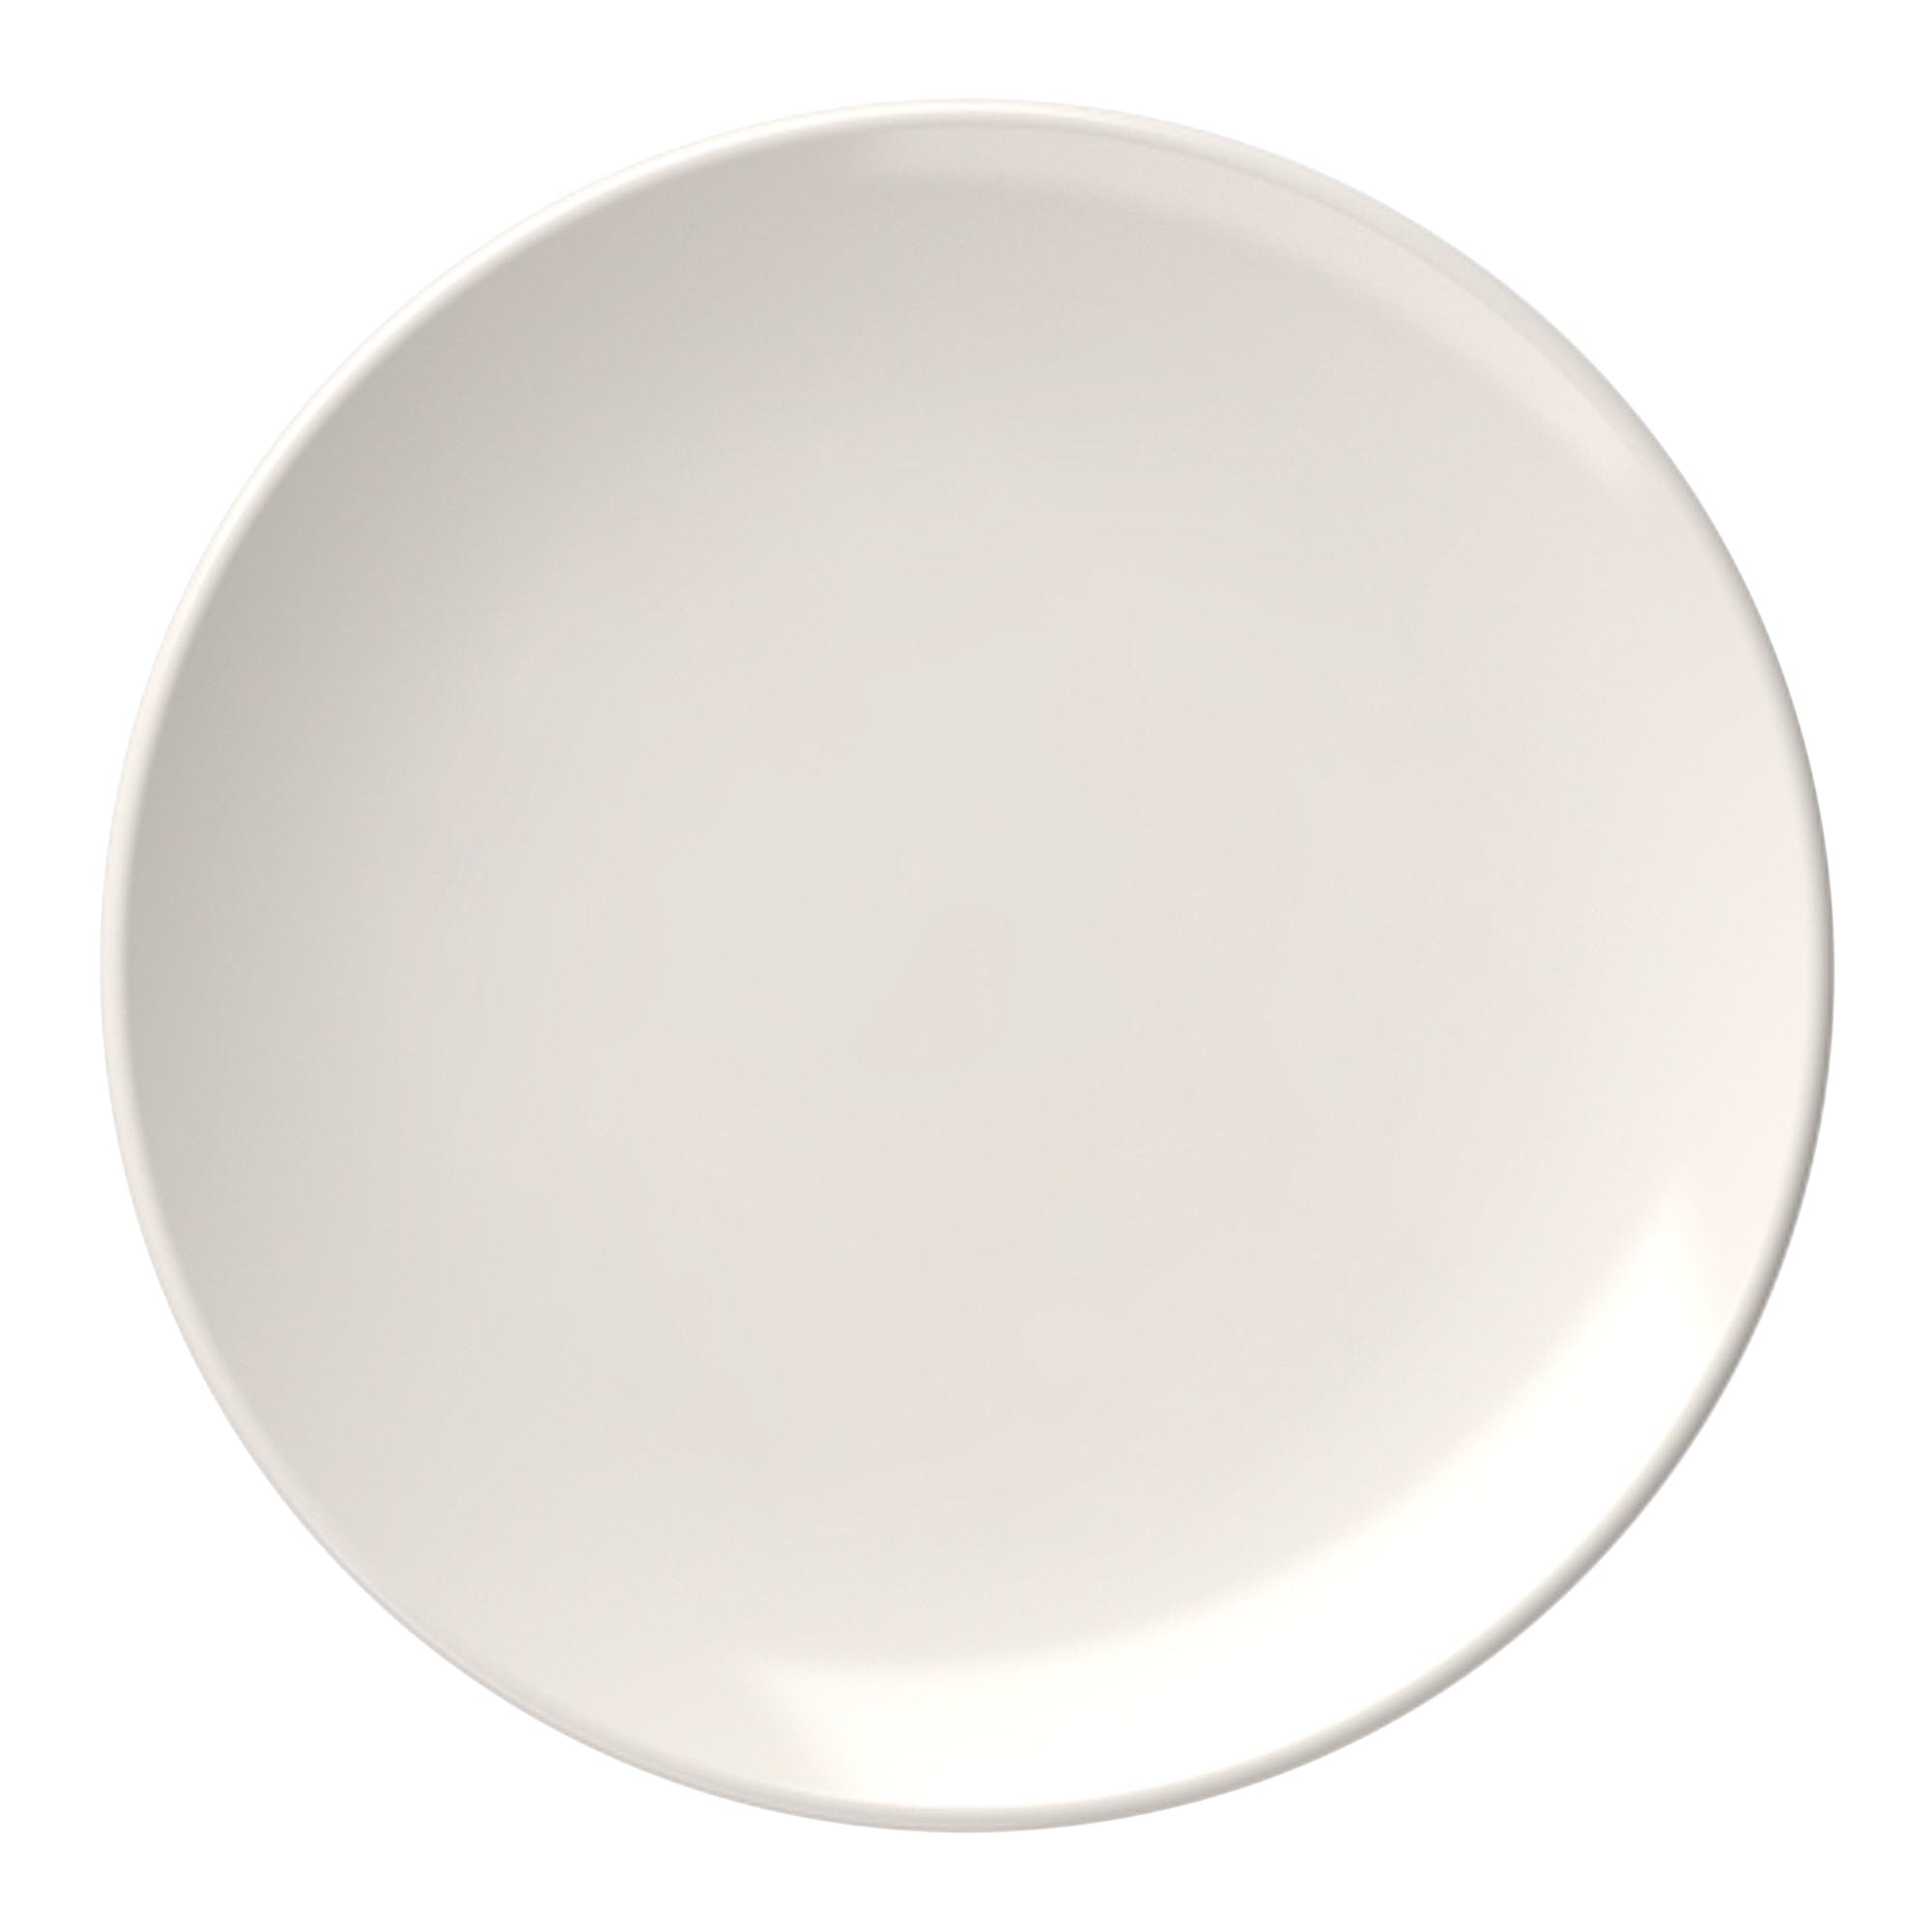 Lona Porcelain Plate 9.8"